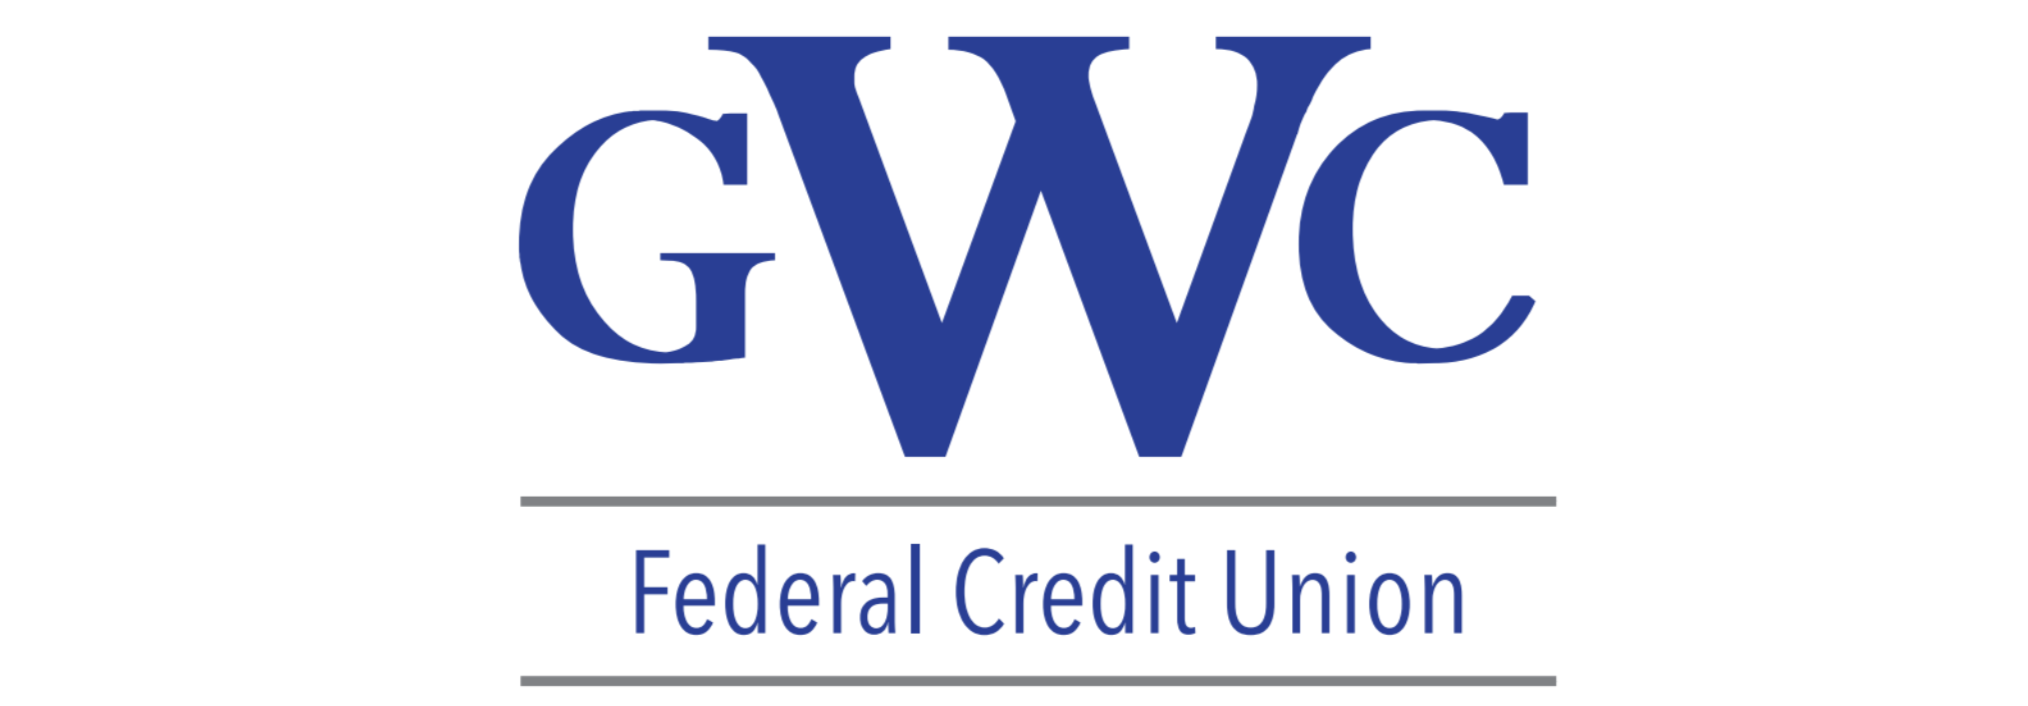 Greater Wayne Federal Credit Union Logo